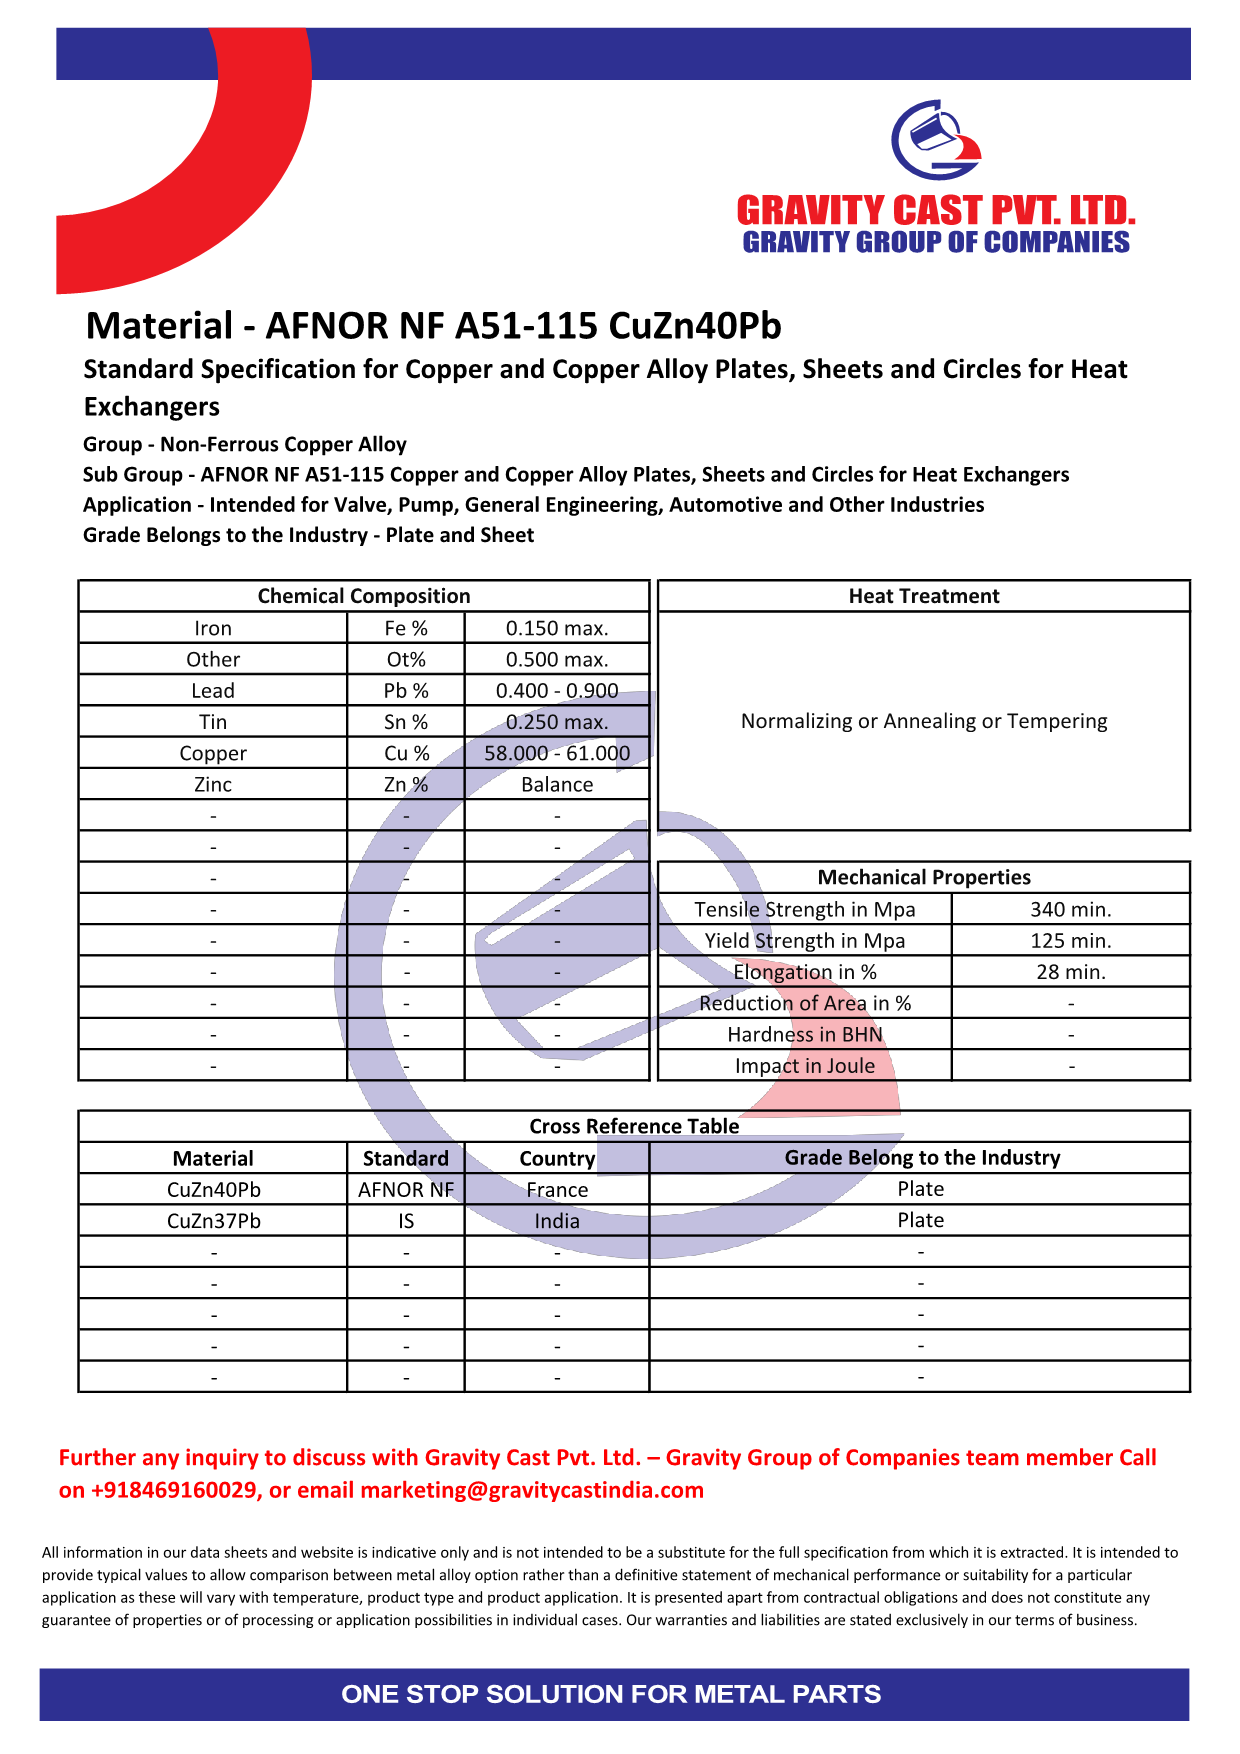 AFNOR NF A51-115 CuZn40Pb.pdf